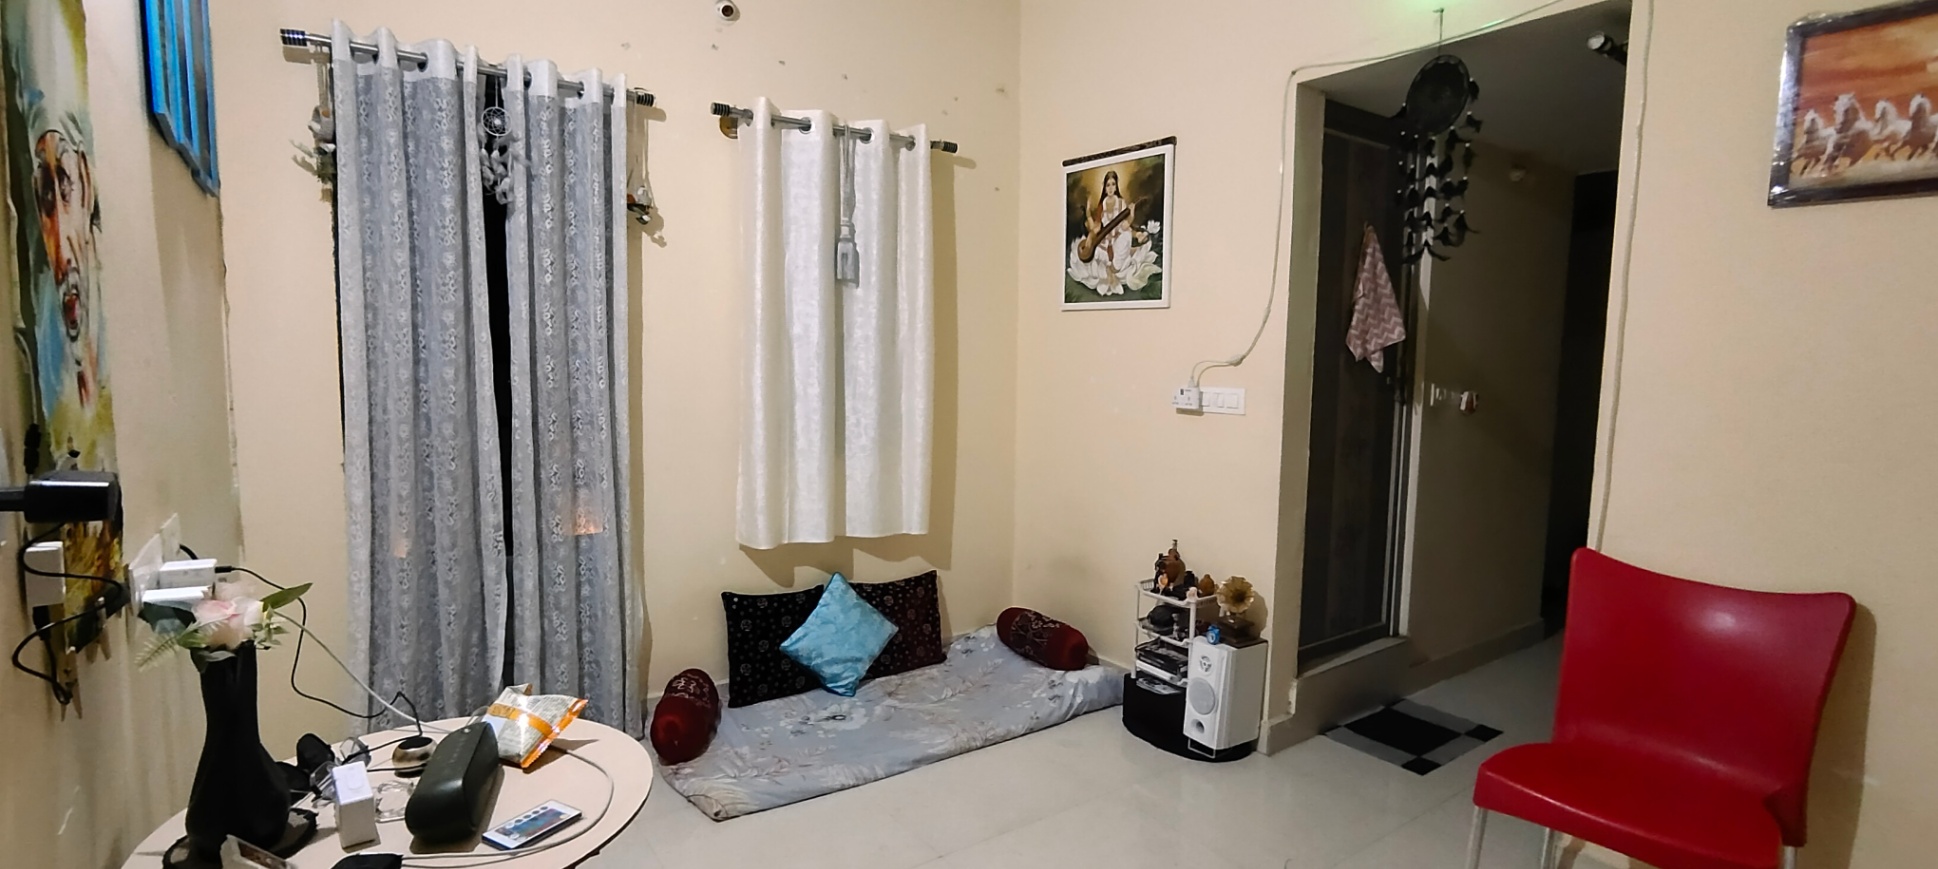 PG/ Roommate for rent @Ayyapa nagar, vrindavan layout, krrishnarajpura, banglore 